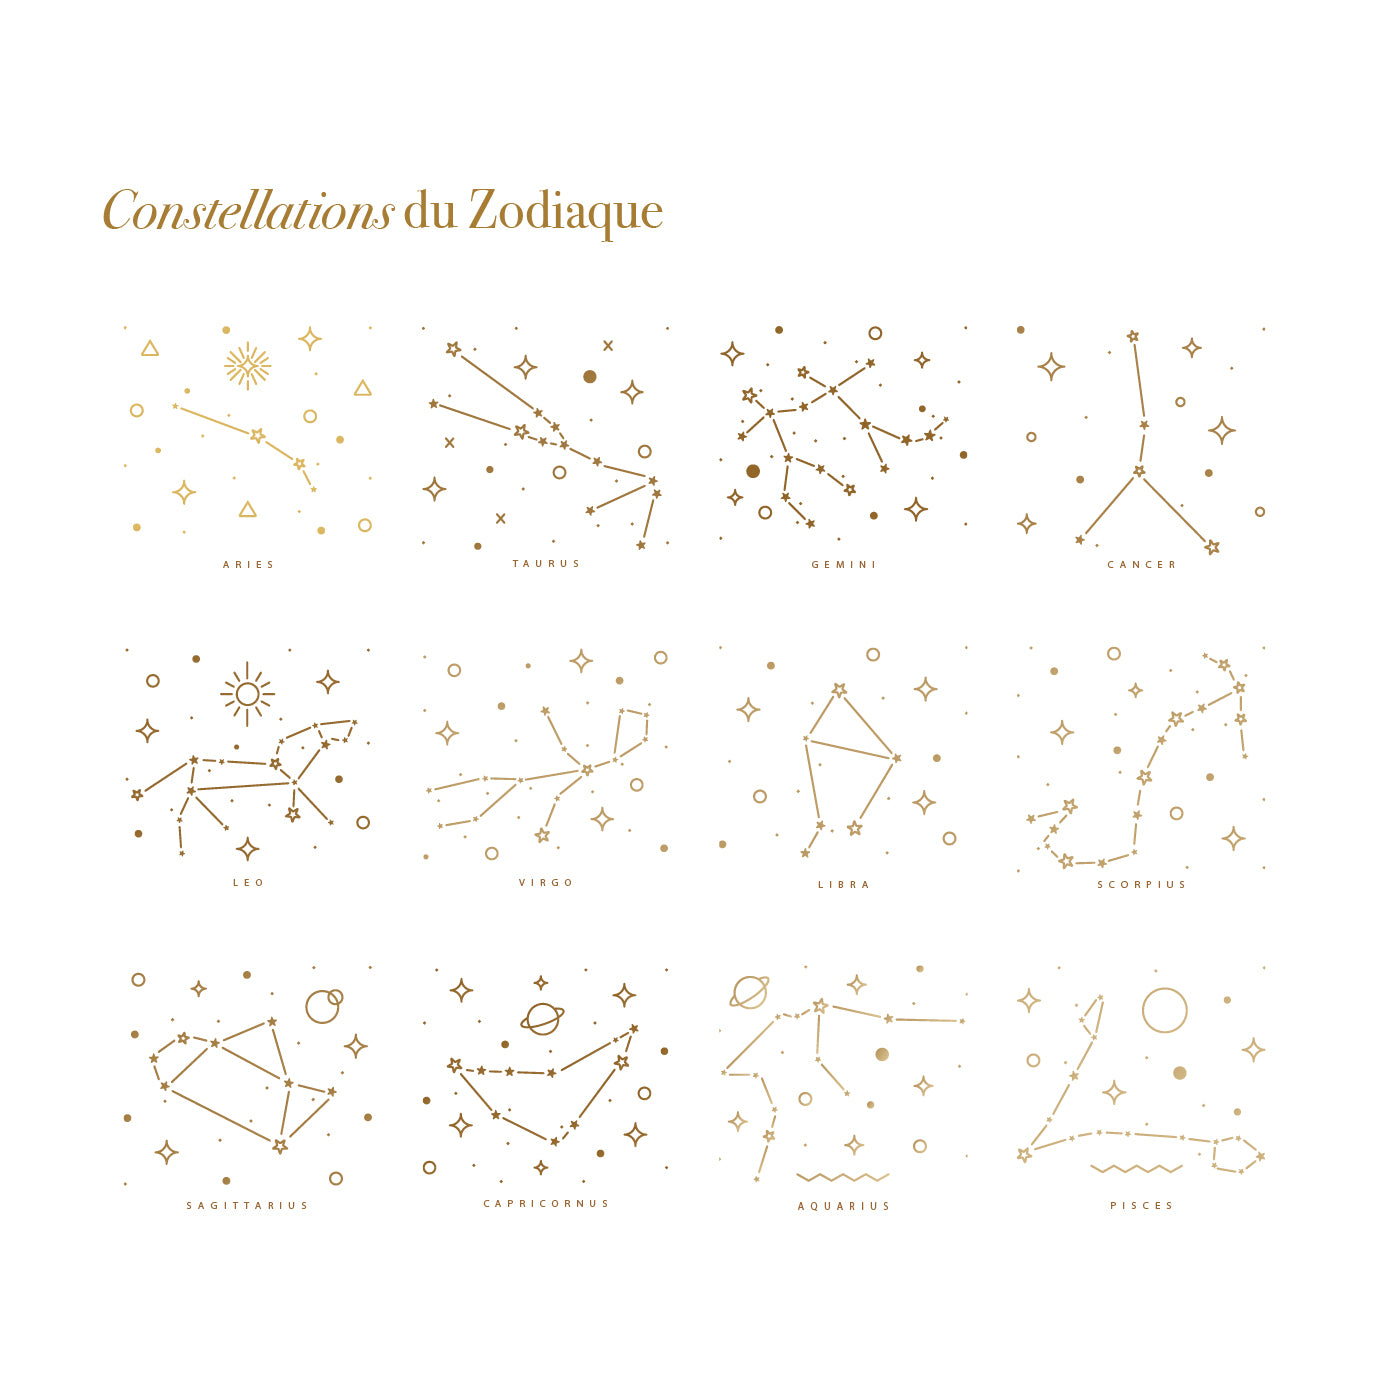 Bracelet constellation du Zodiaque - waekura